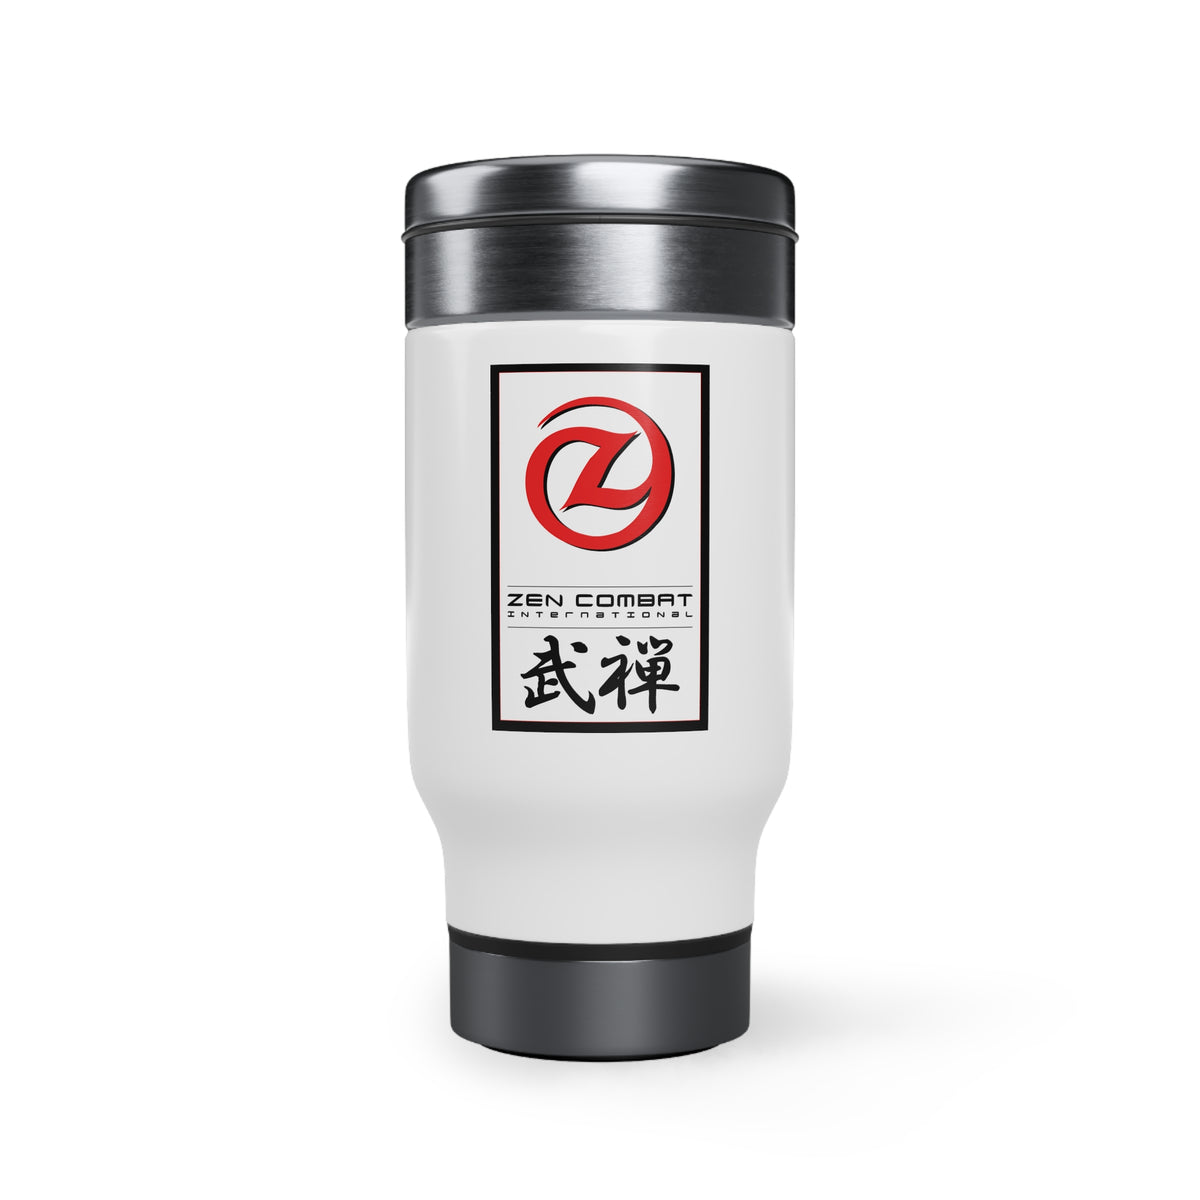 Zen Combat Stainless Steel Travel Mug with Handle, 14oz